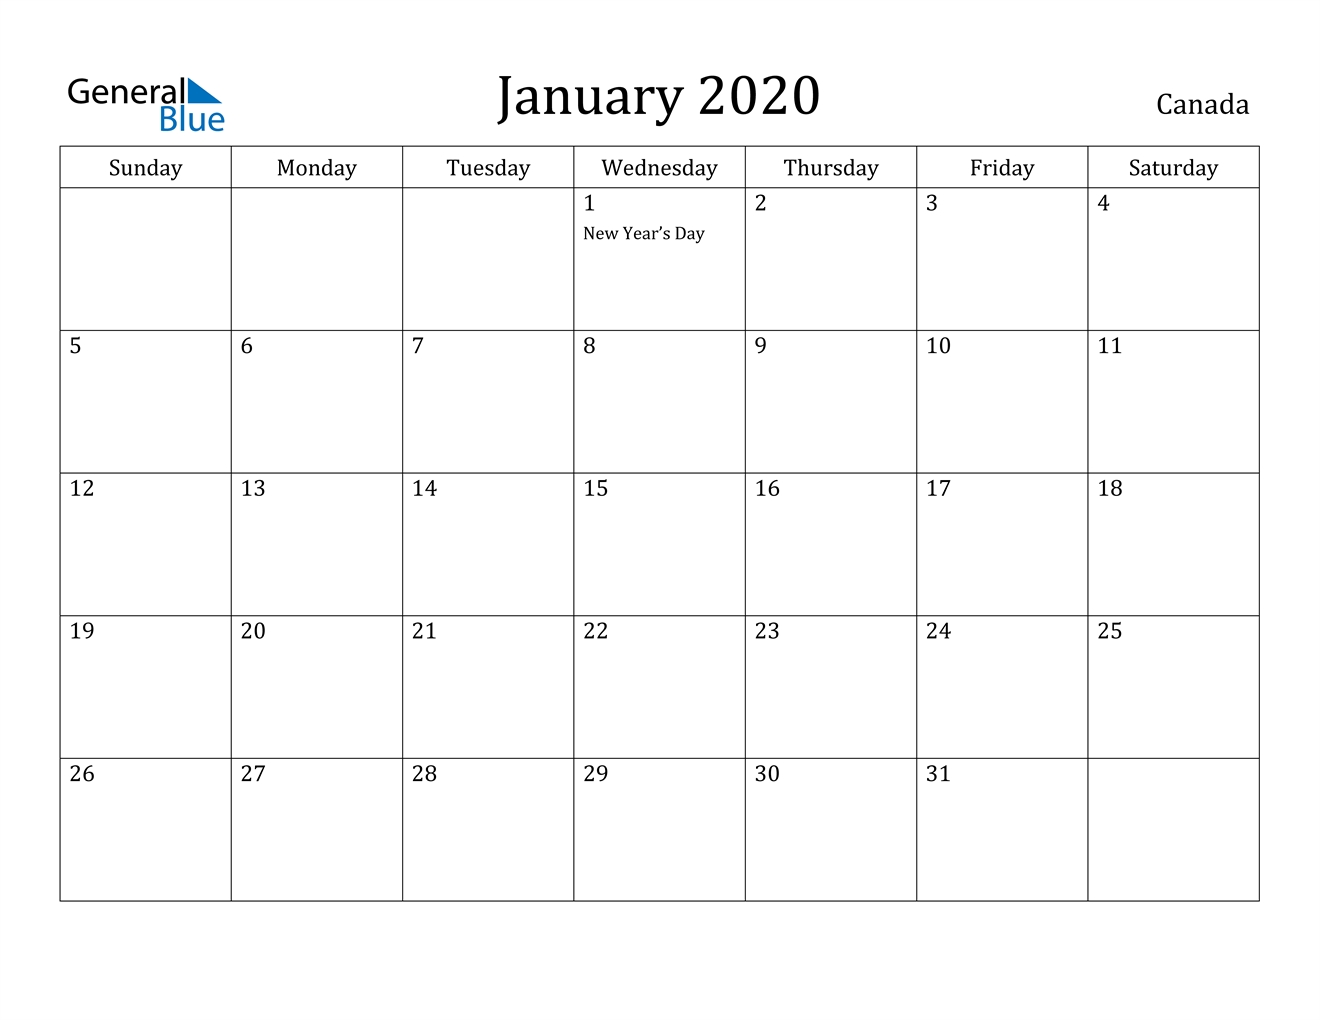 January 2020 Calendar - Canada Incredible June 2020 Calendar Canada